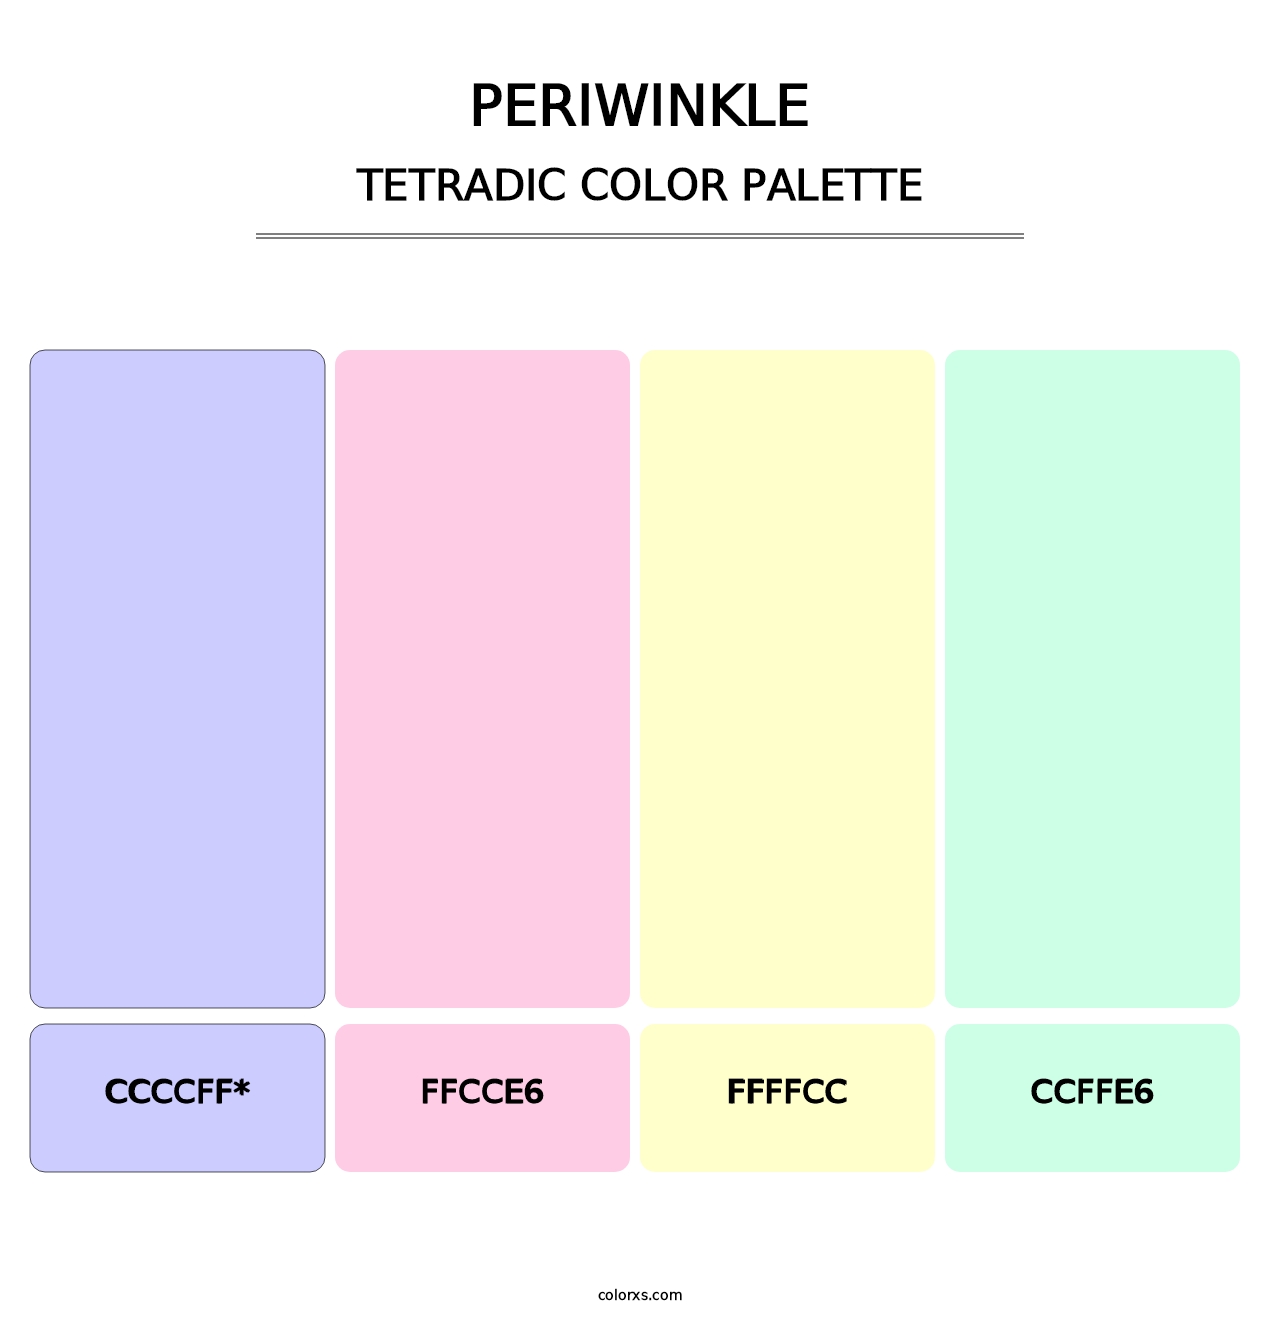 Periwinkle - Tetradic Color Palette